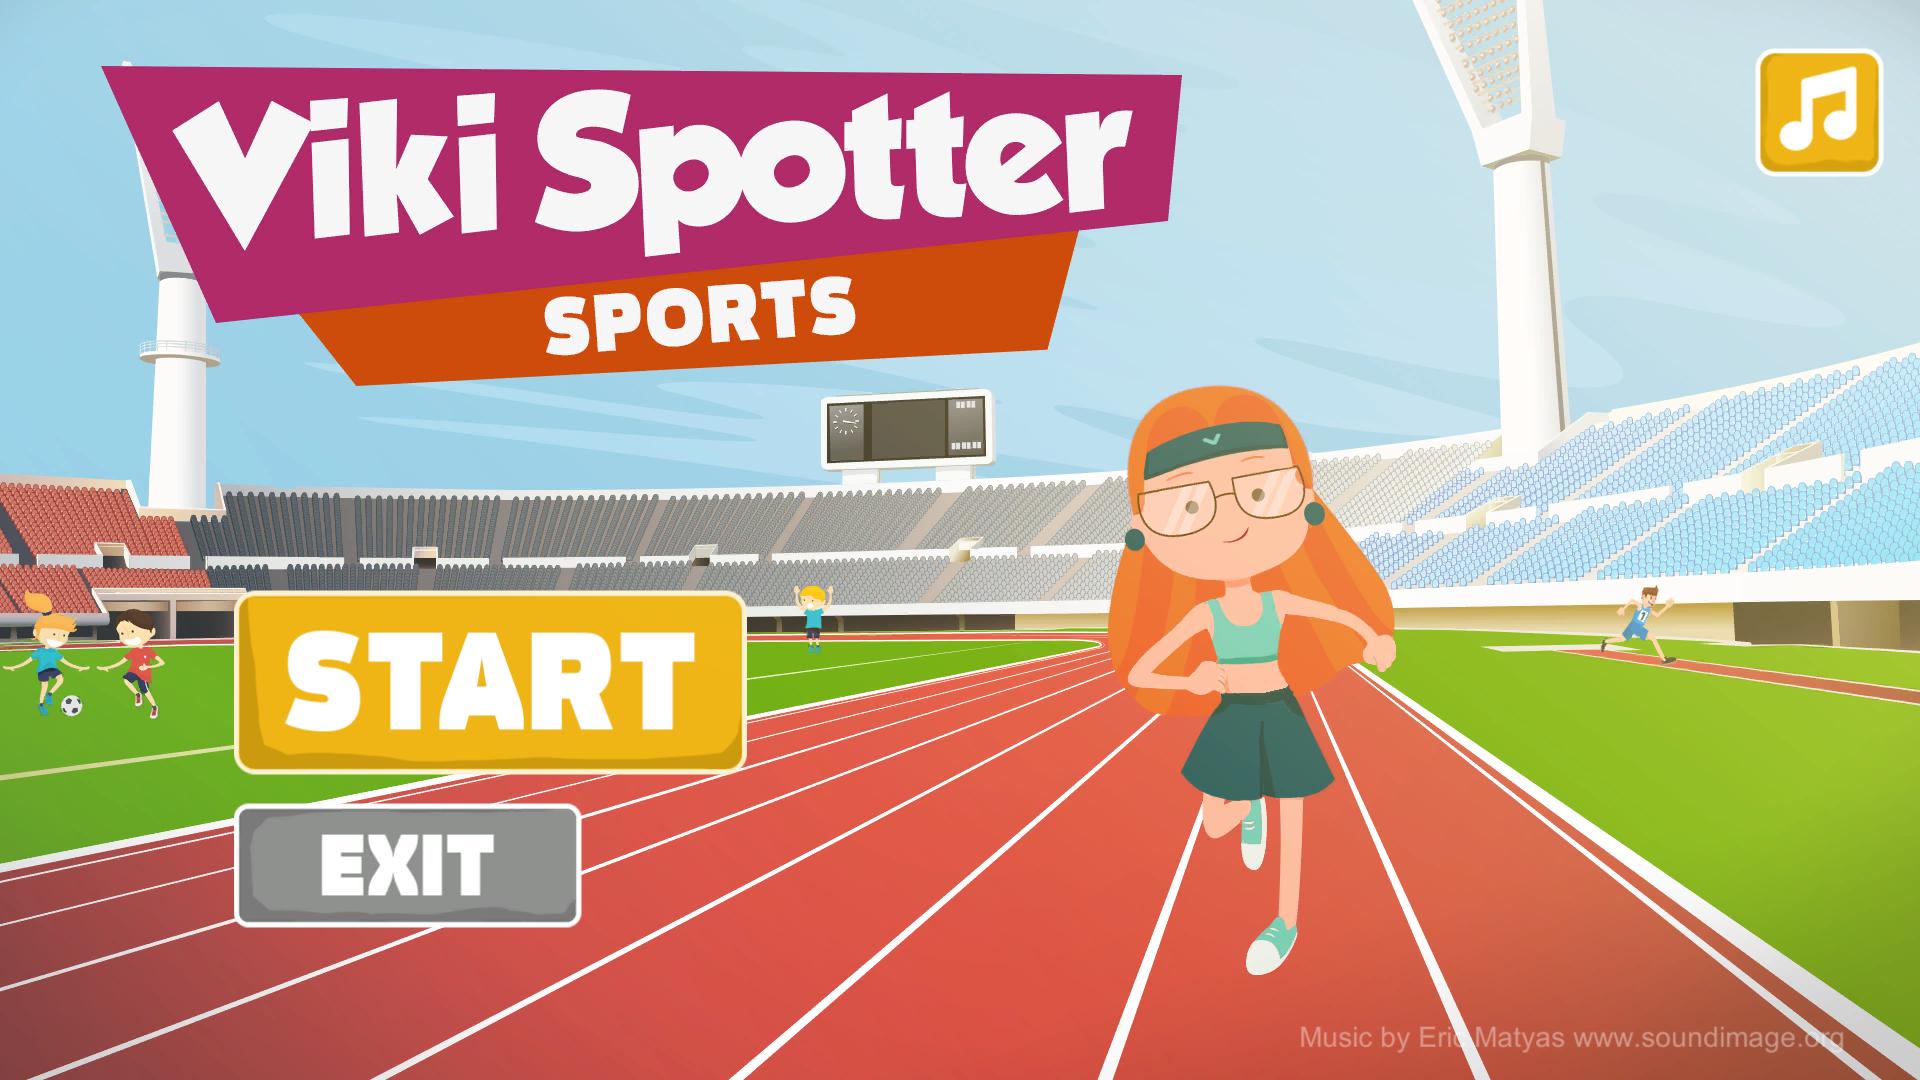 [$ 0.64] Viki Spotter: Sports Steam CD Key